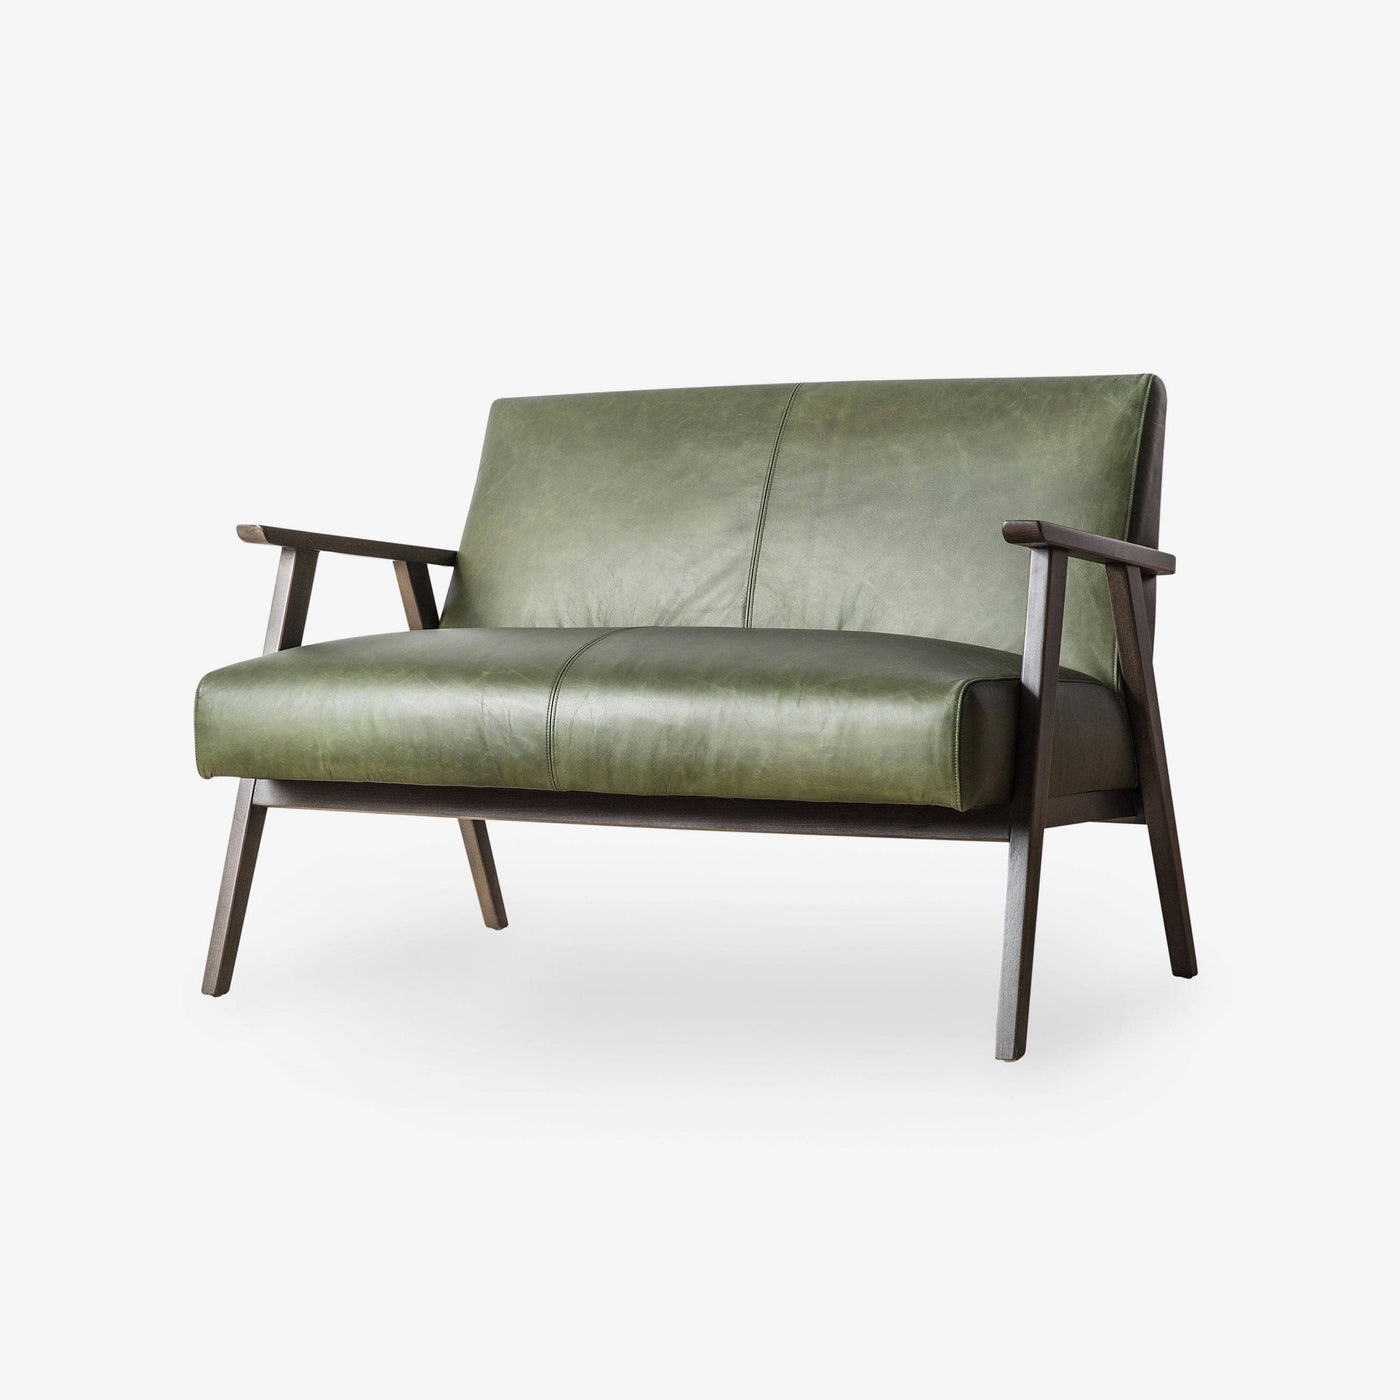 Neyland 2 Seater Leather Sofa, Green - 3